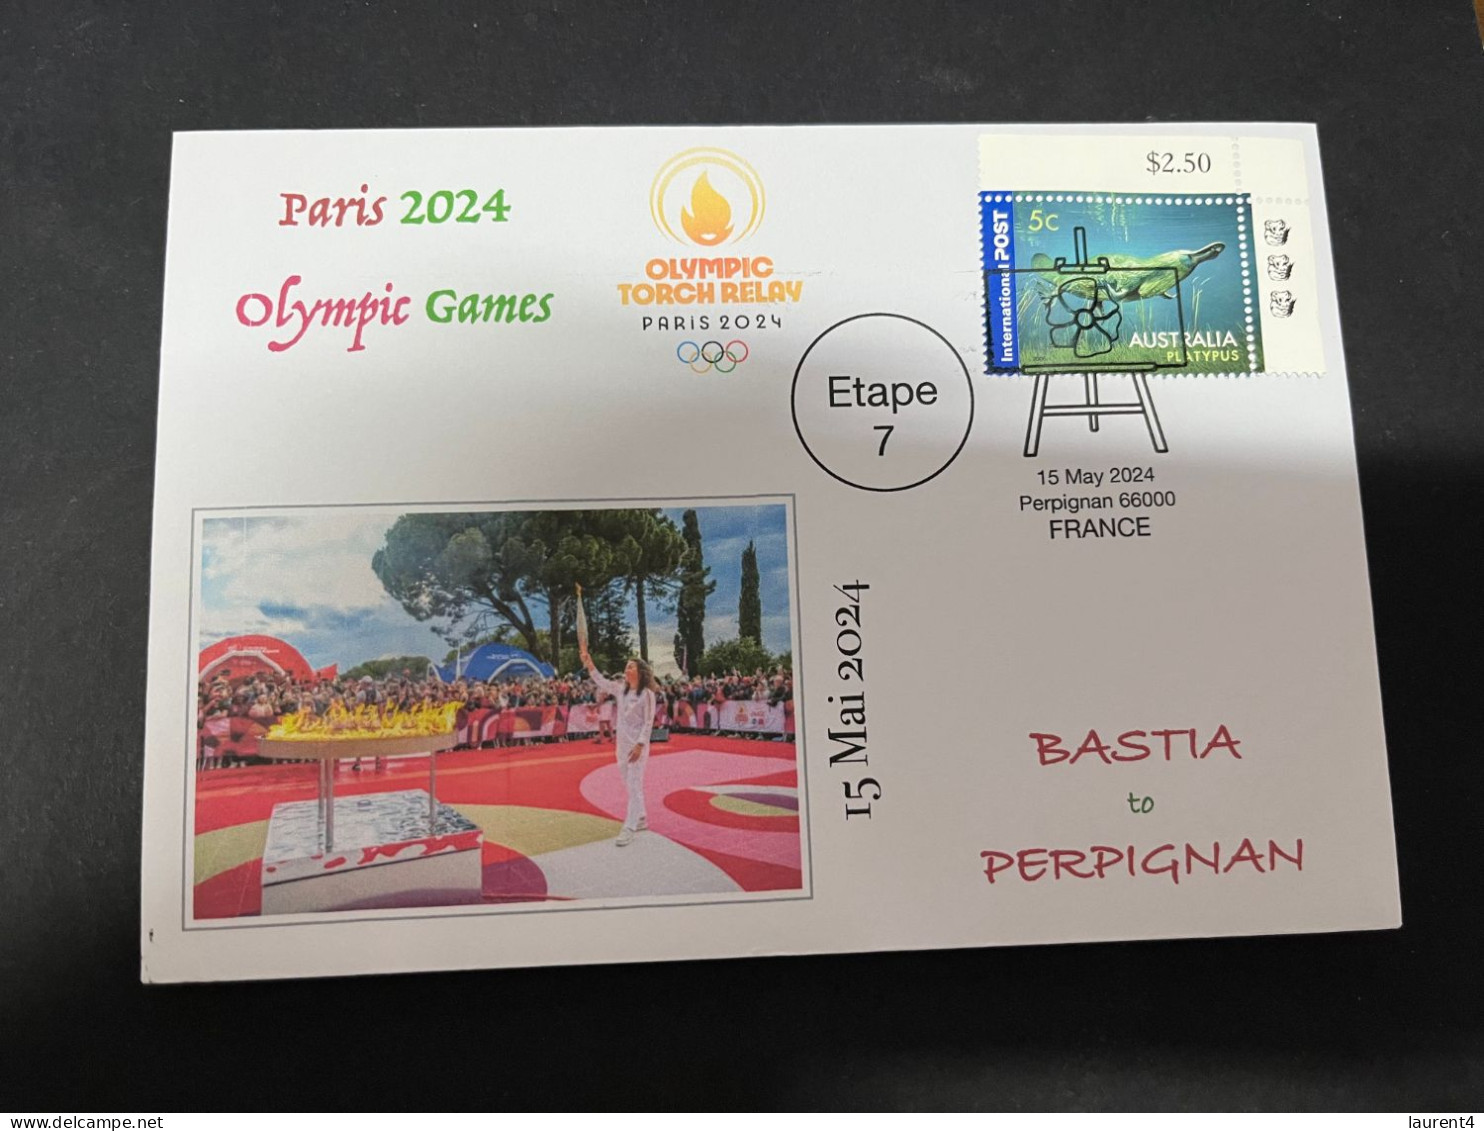 16-5-2024 (5 Z 17) Paris Olympic Games 2024 - Torch Relay (Etape 7) In Perpignan (15-5-2024) With OZ Stamp - Eté 2024 : Paris